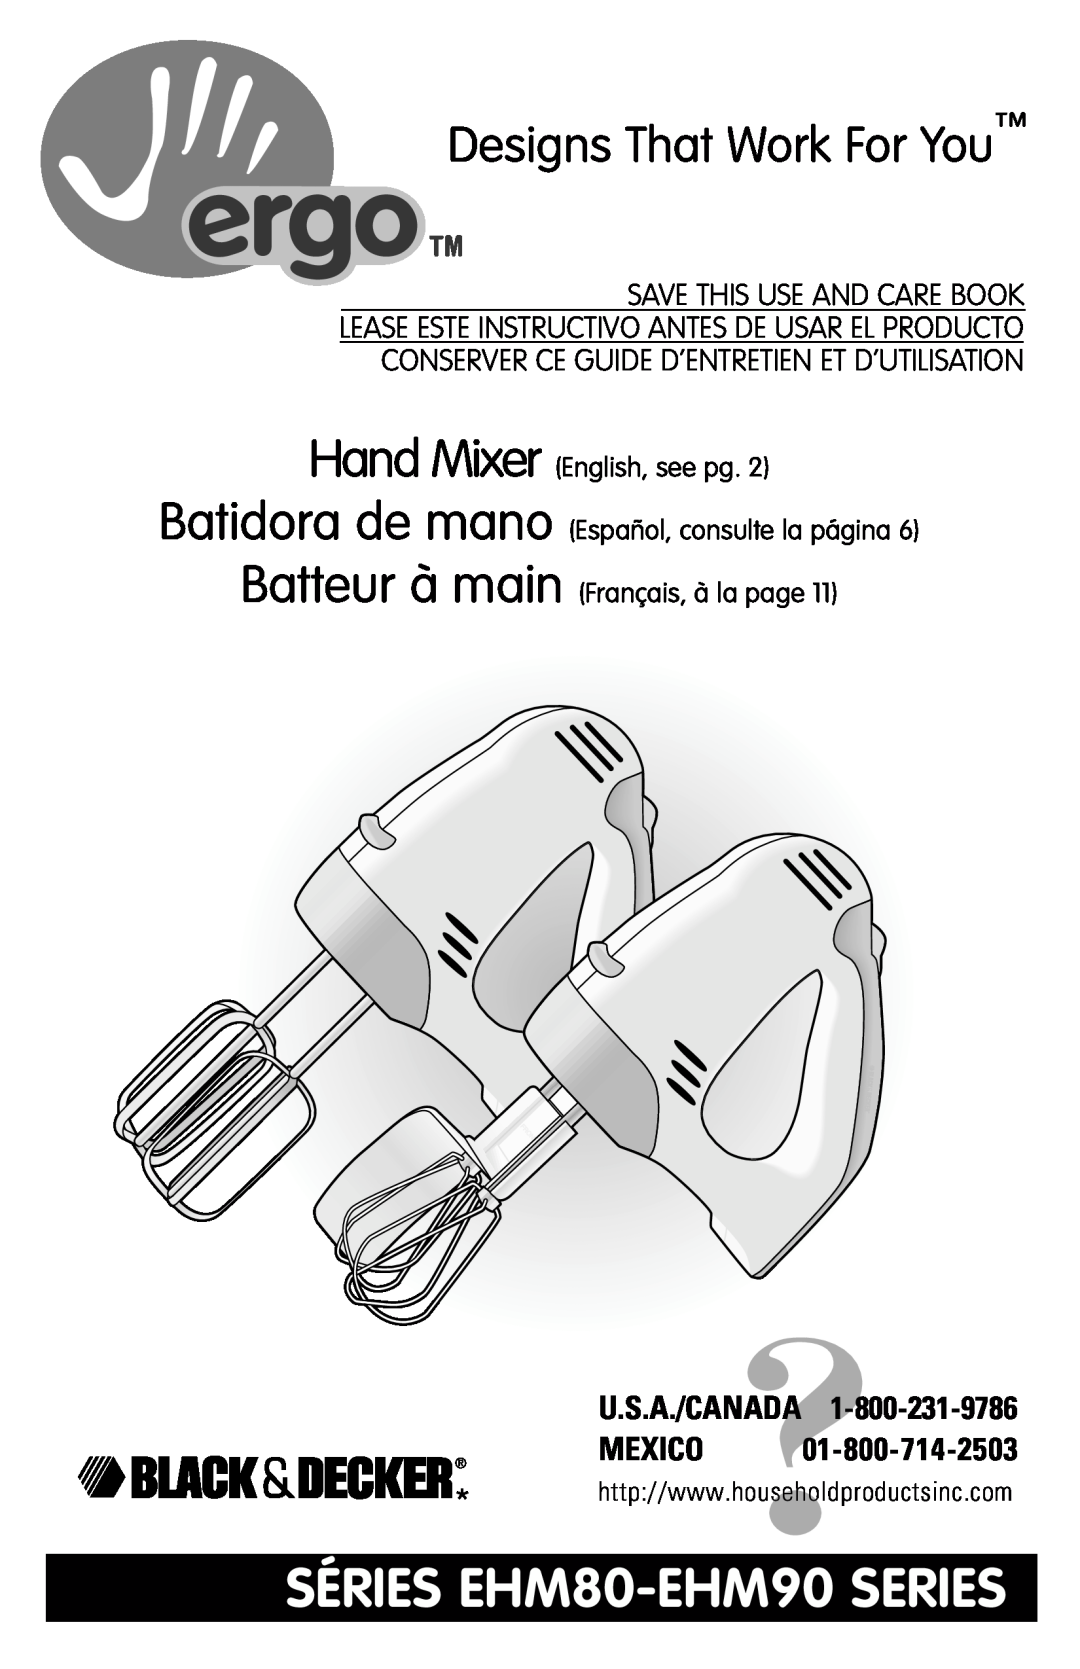 Black & Decker manual SÉRIES EHM80-EHM90 SERIES, Designs That Work For You, U.S.A./Canada, Mexico, 01-800-714-2503 